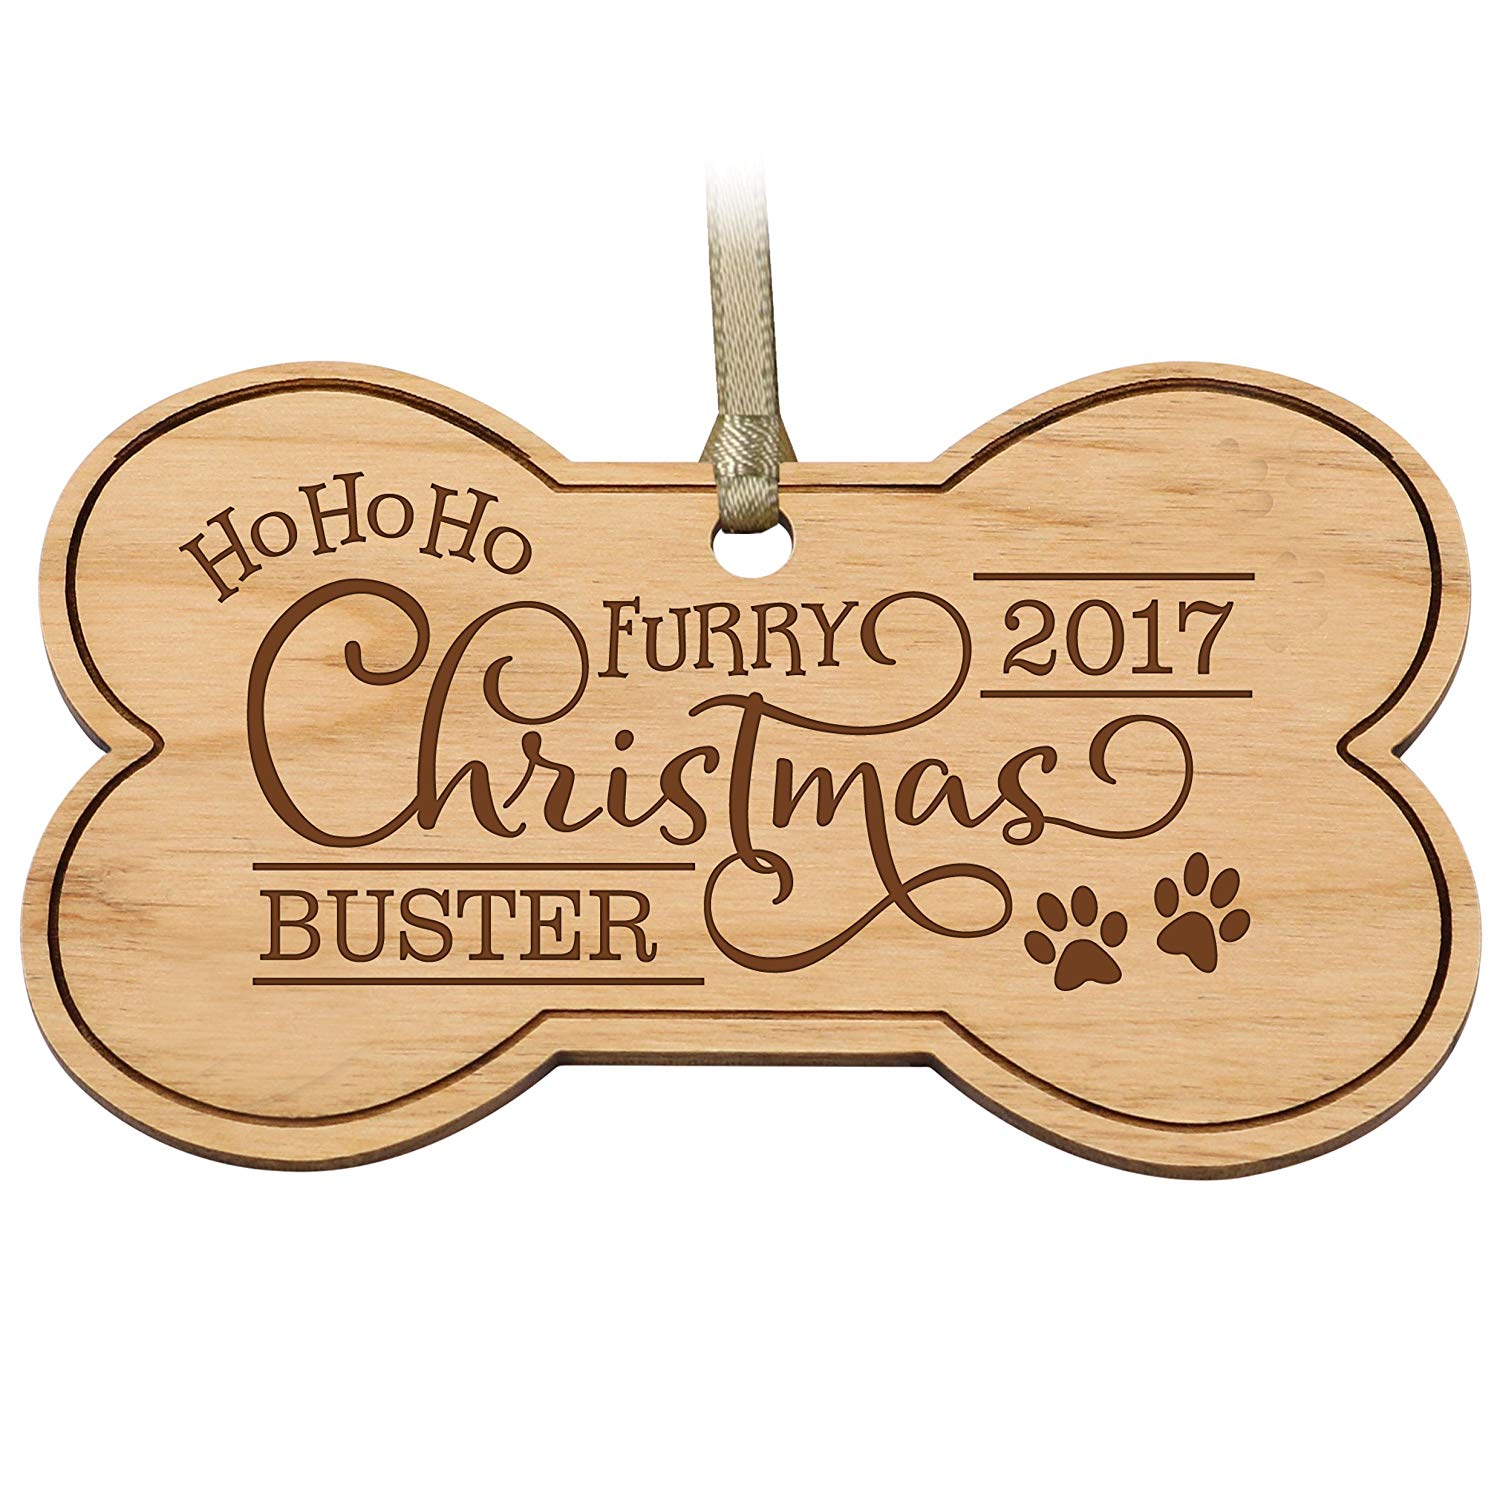 Personalized Pet Christmas Ornament - Furry Christmas - LifeSong Milestones